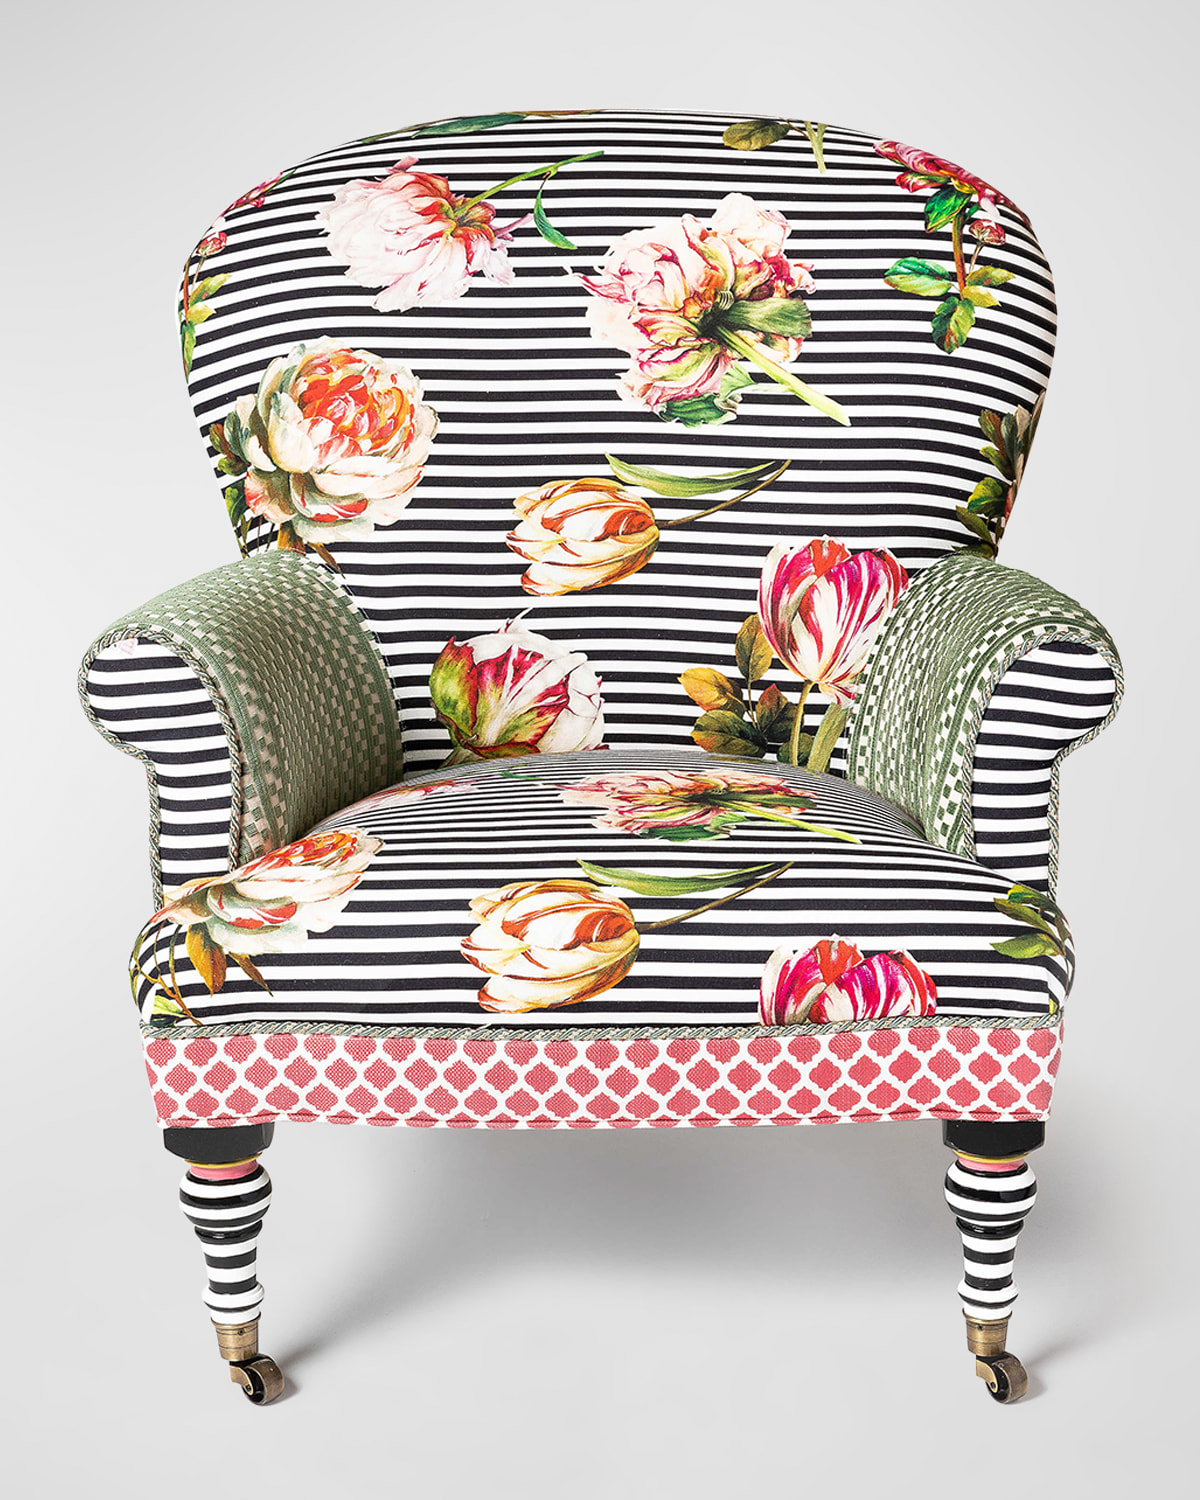 Mackenzie-childs Flower Show Accent Chair In Multi